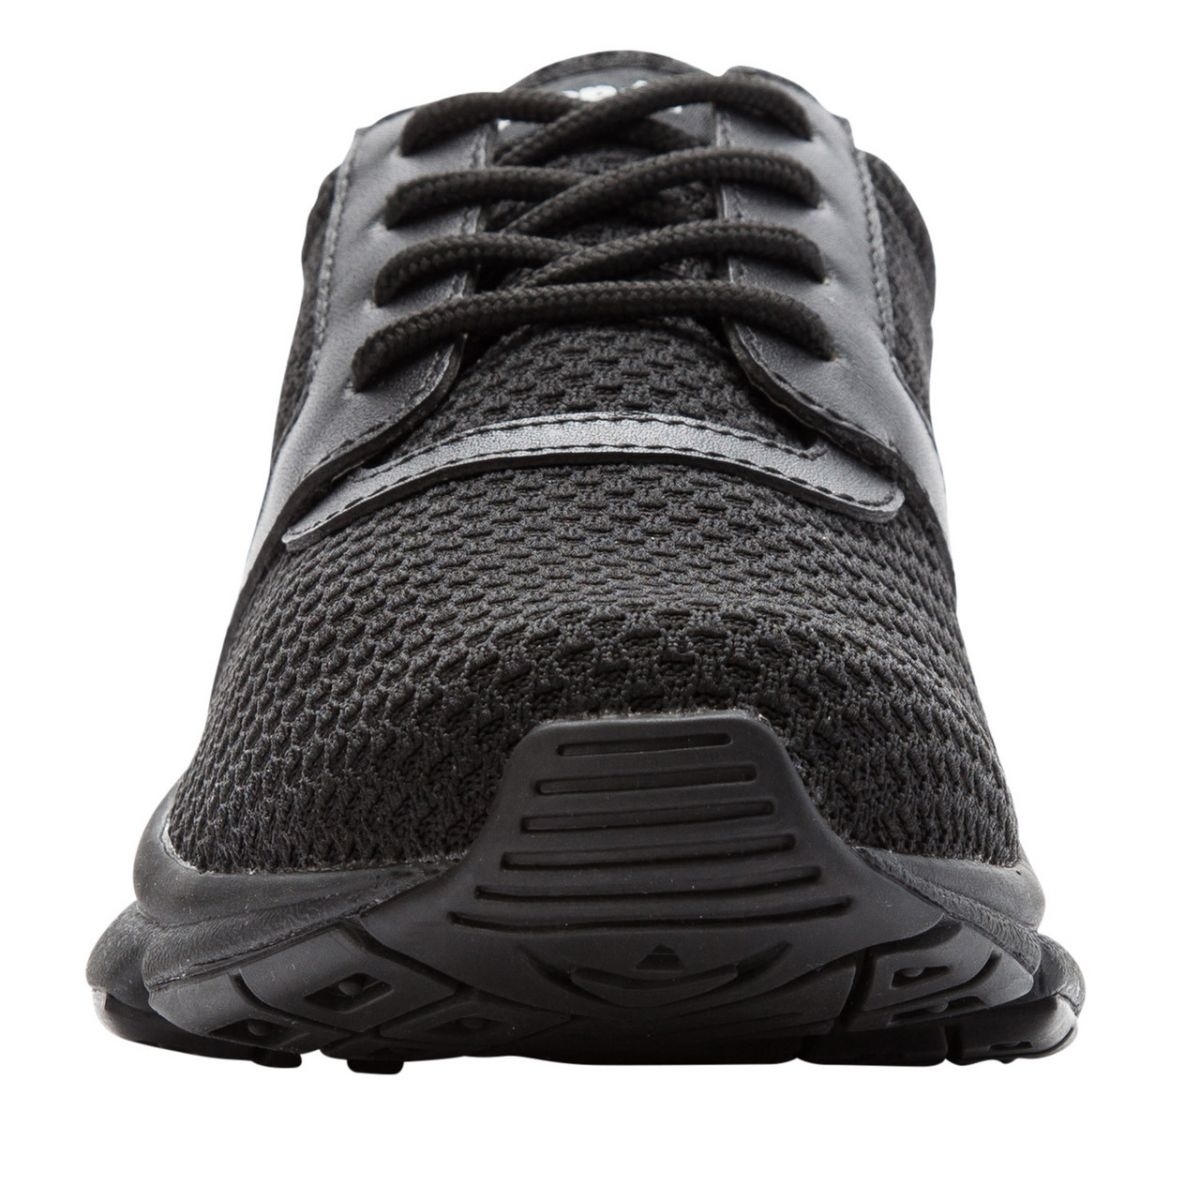 Propet Women's Stability X Walking Shoe Black - WAA032MBLK BLACK - BLACK, 10-2E